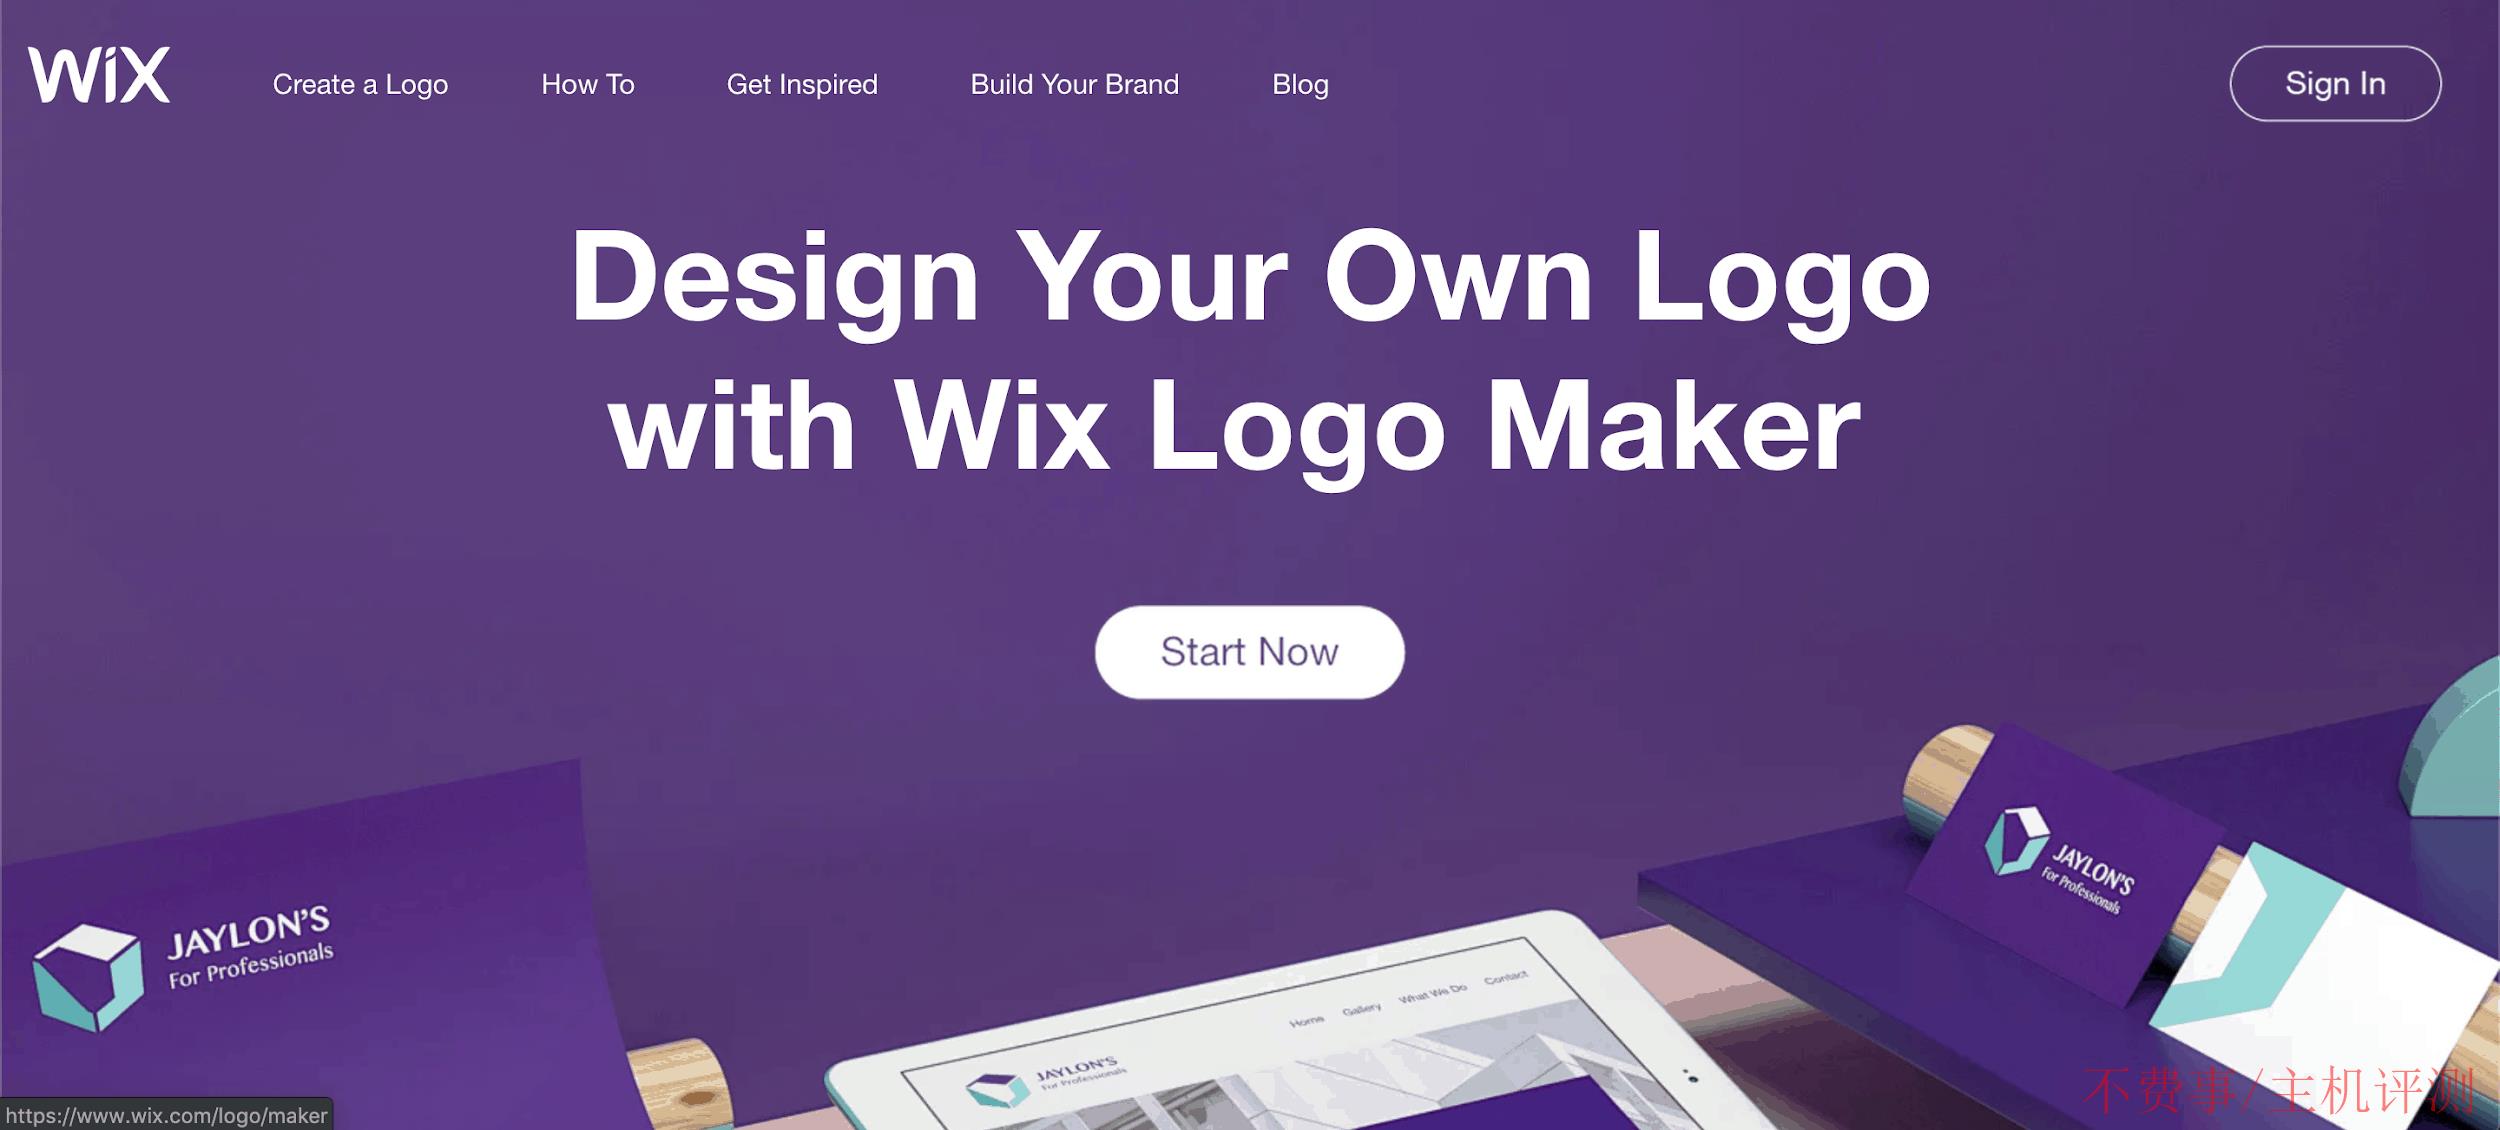 Wix Logo Maker screenshot - homepage